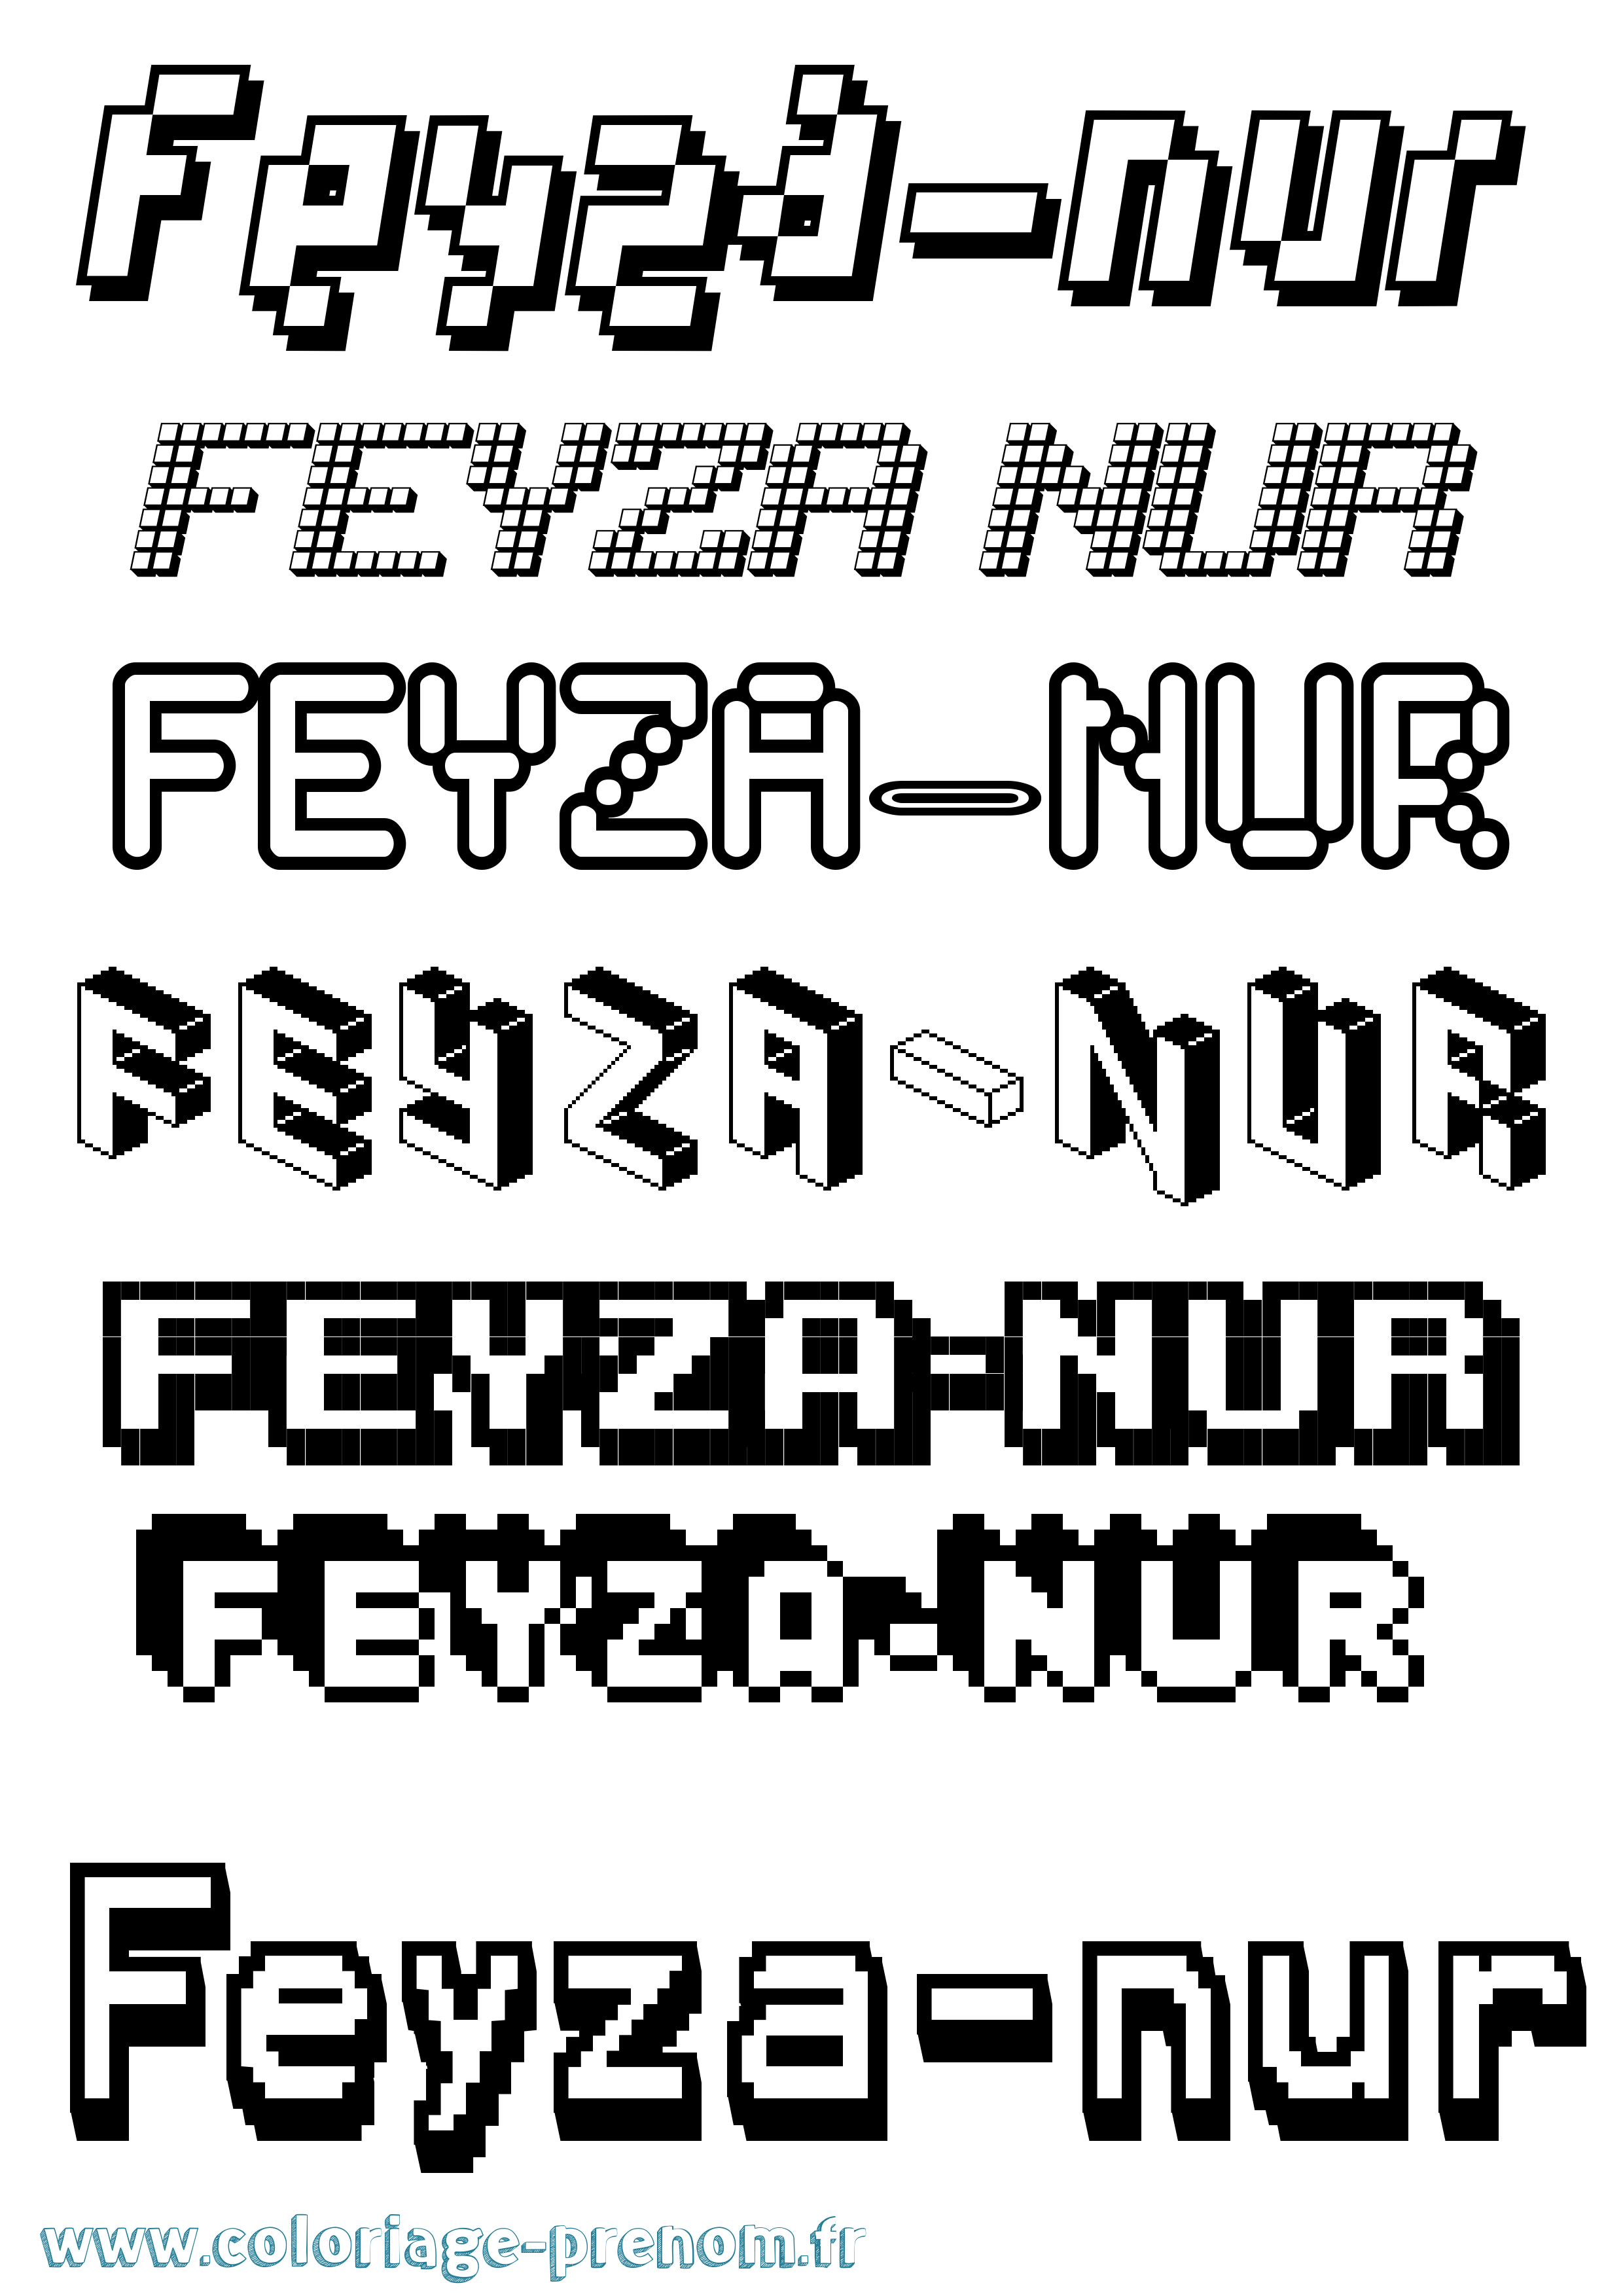 Coloriage prénom Feyza-Nur Pixel